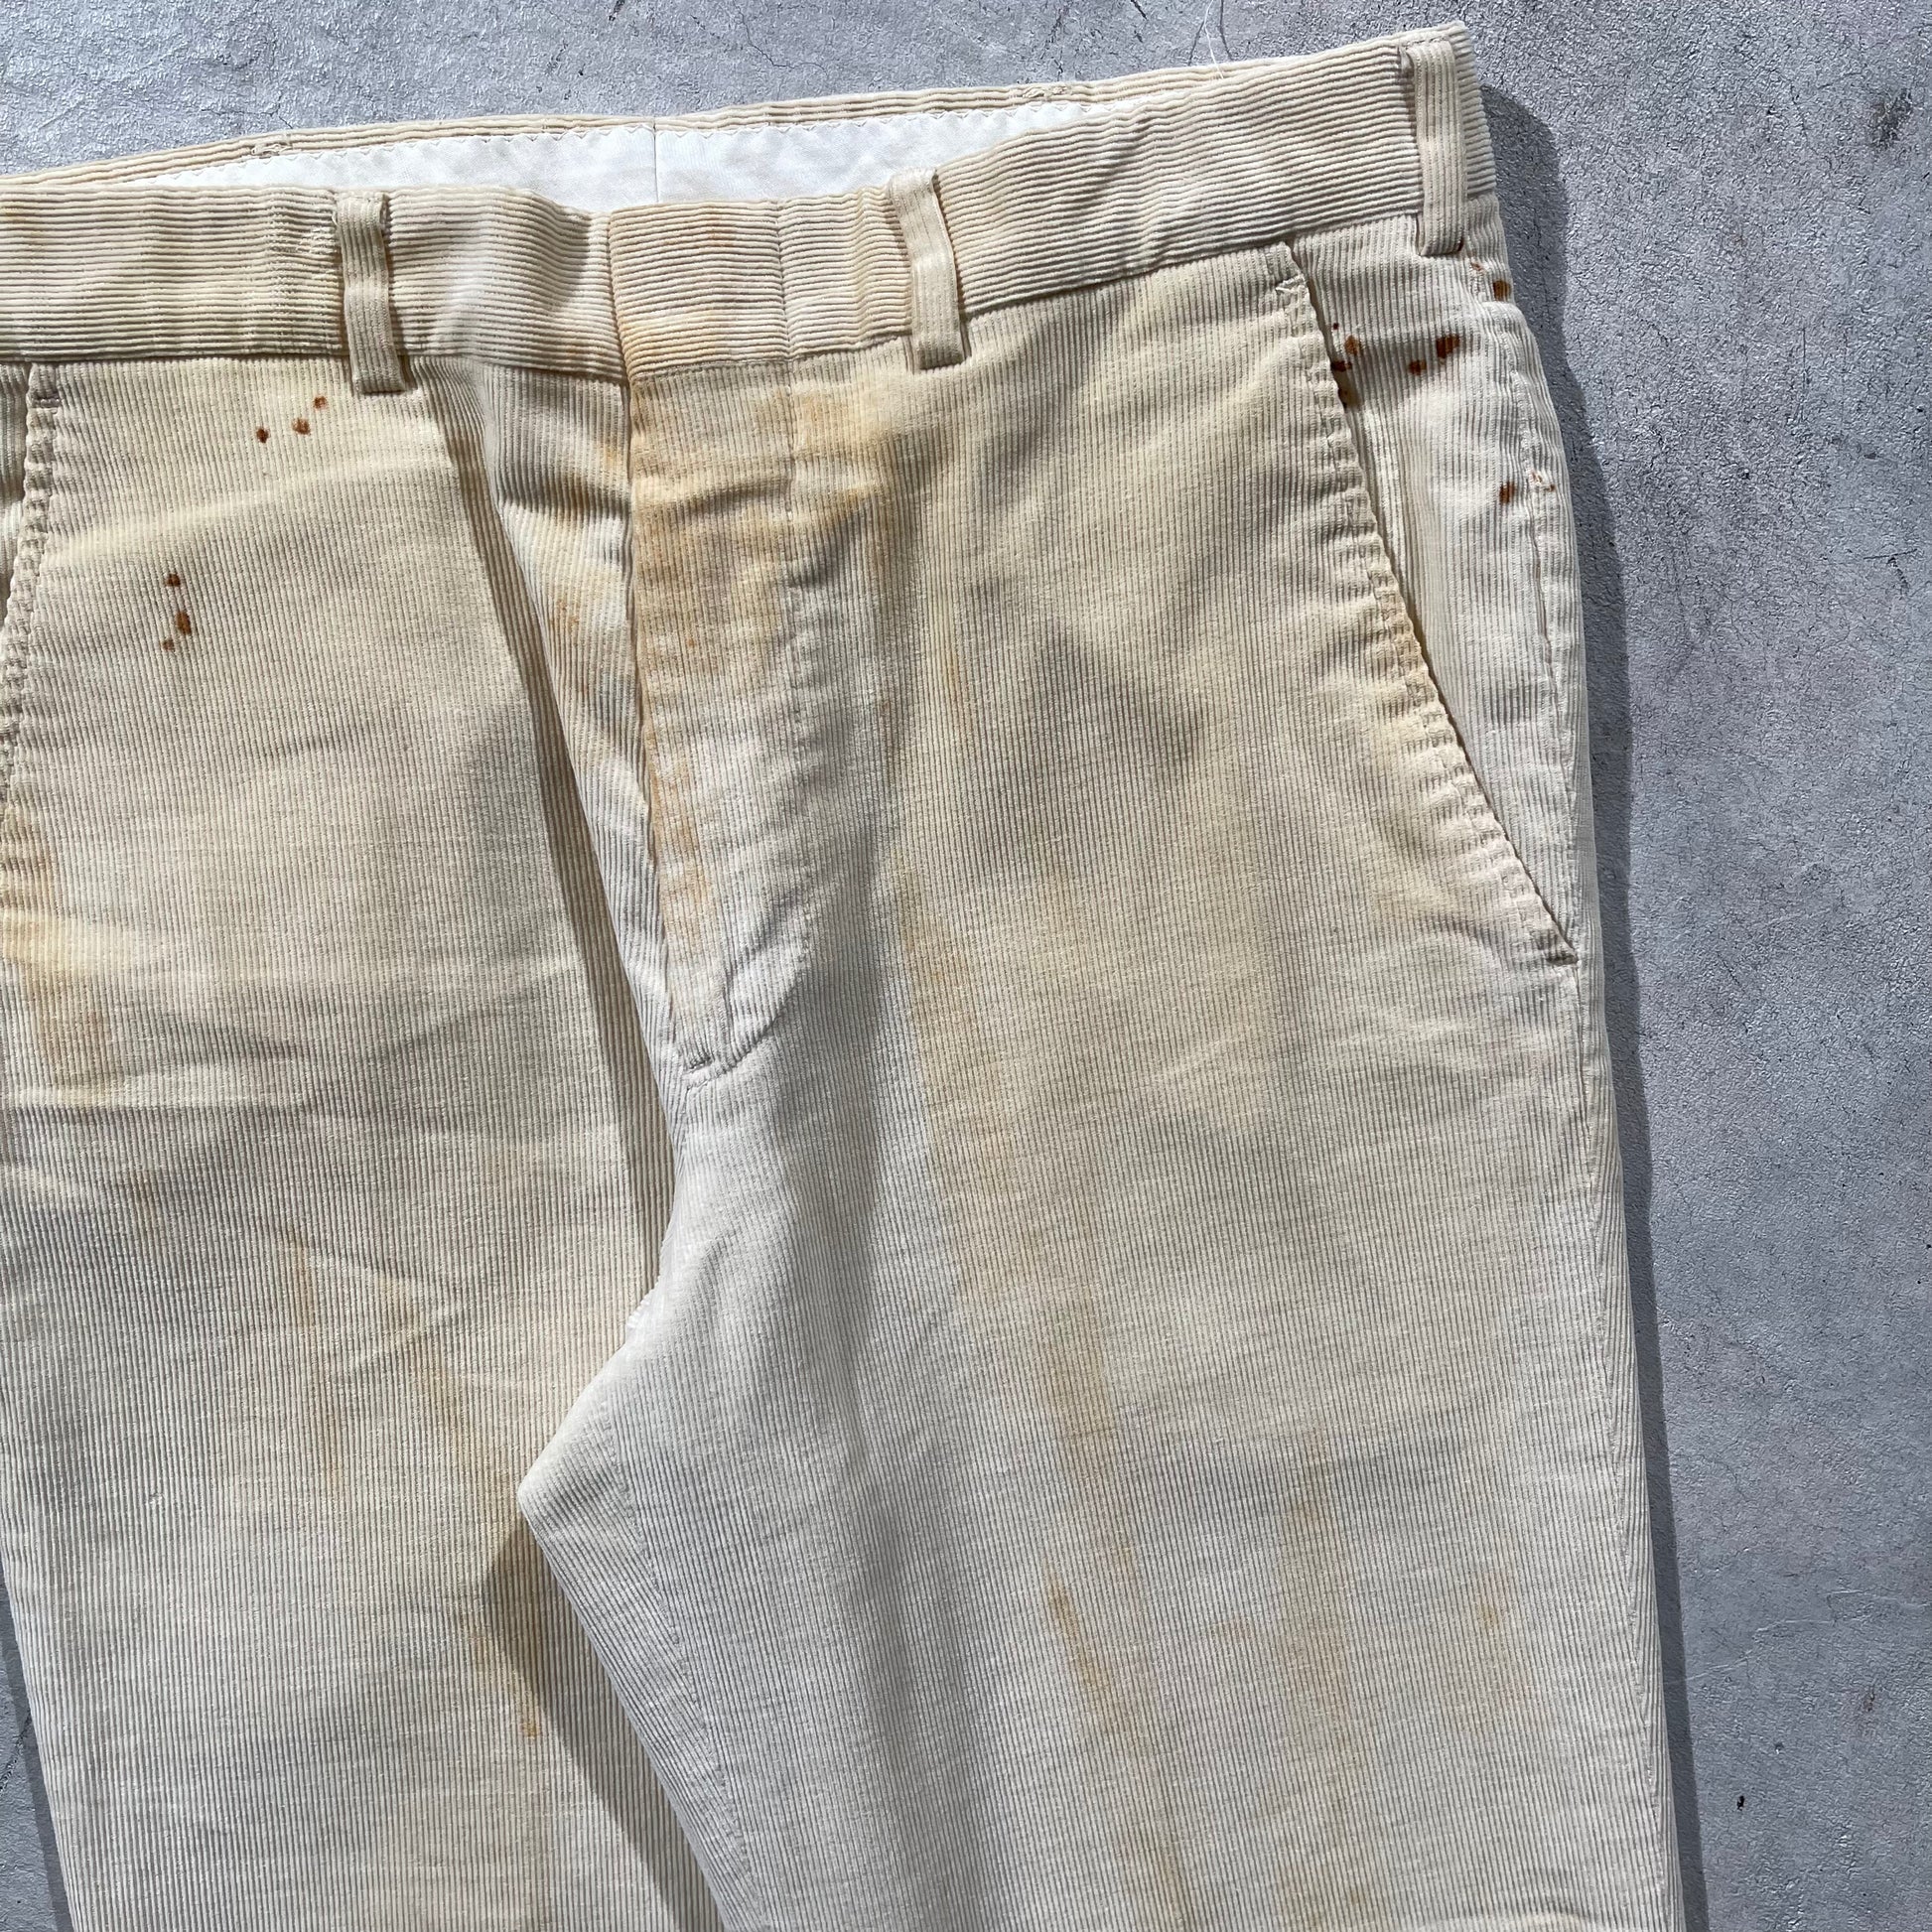 70s Day's Ranger Whipcord Pants- 30 – Plum Garments